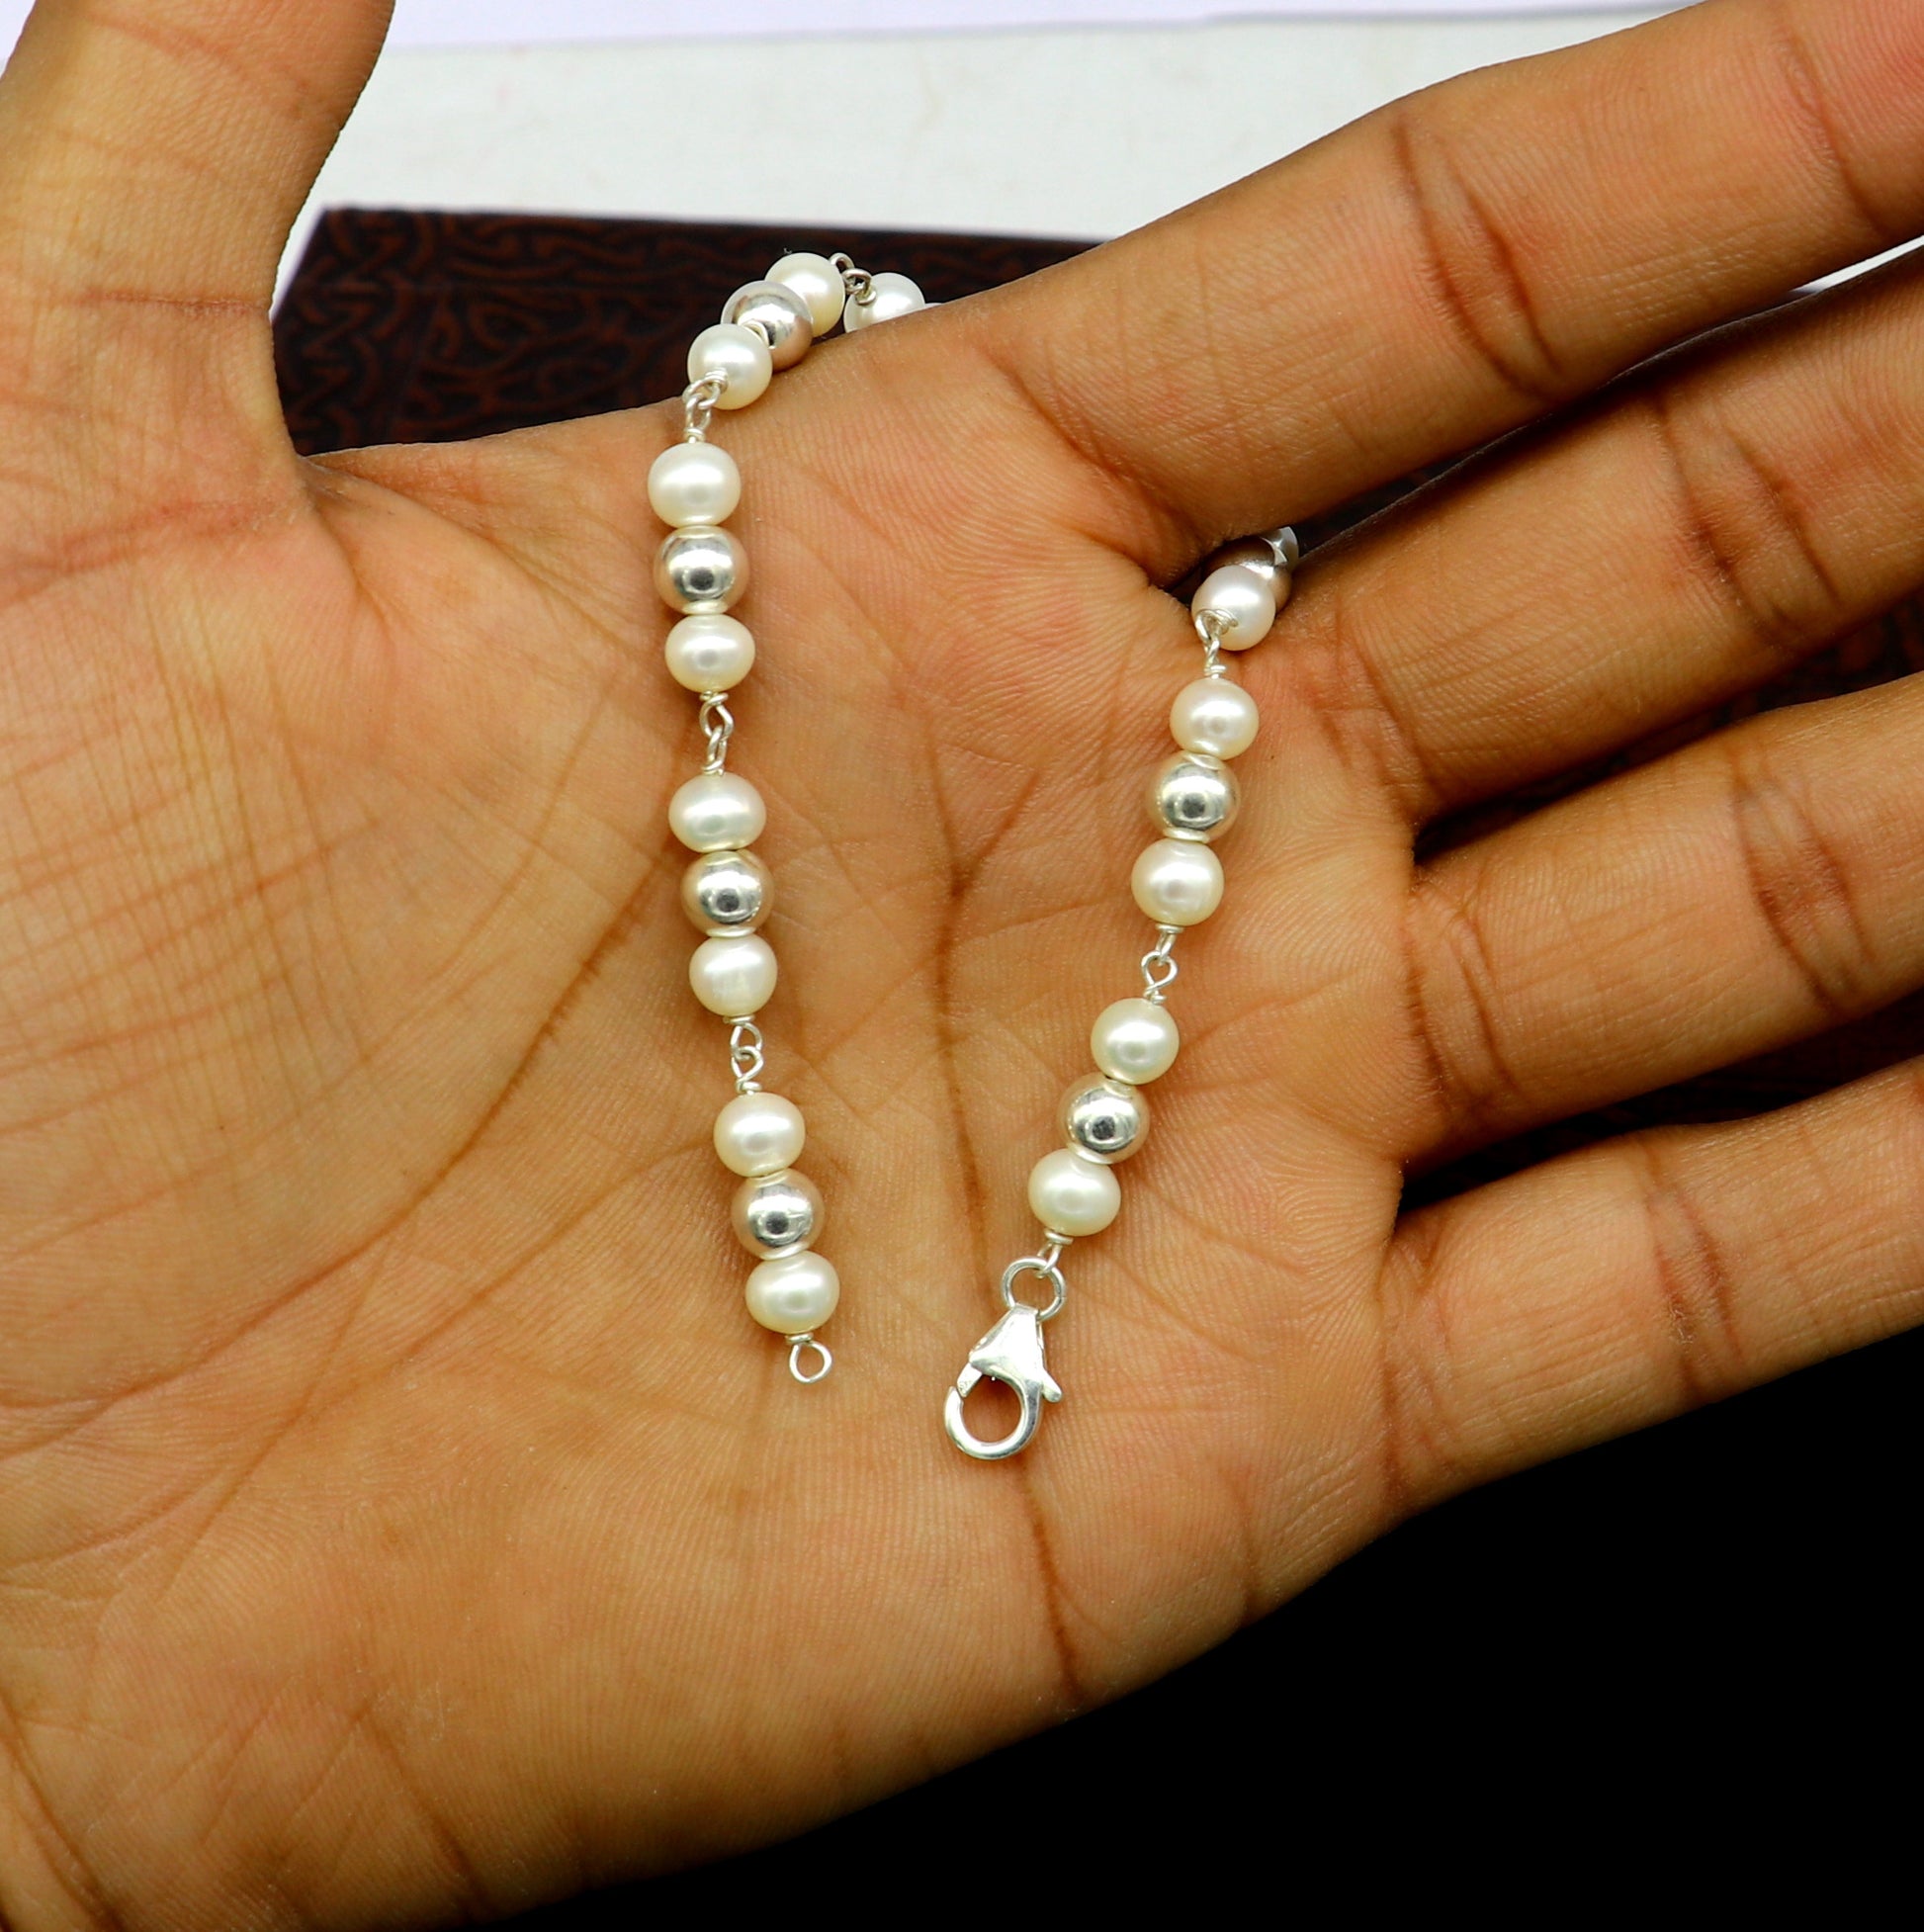 925 sterling silver handmade 5.5 mm round beads balls pearl bracelet, fabulous customized 7.5"long beaded bracelet stylish gift sbr212 - TRIBAL ORNAMENTS